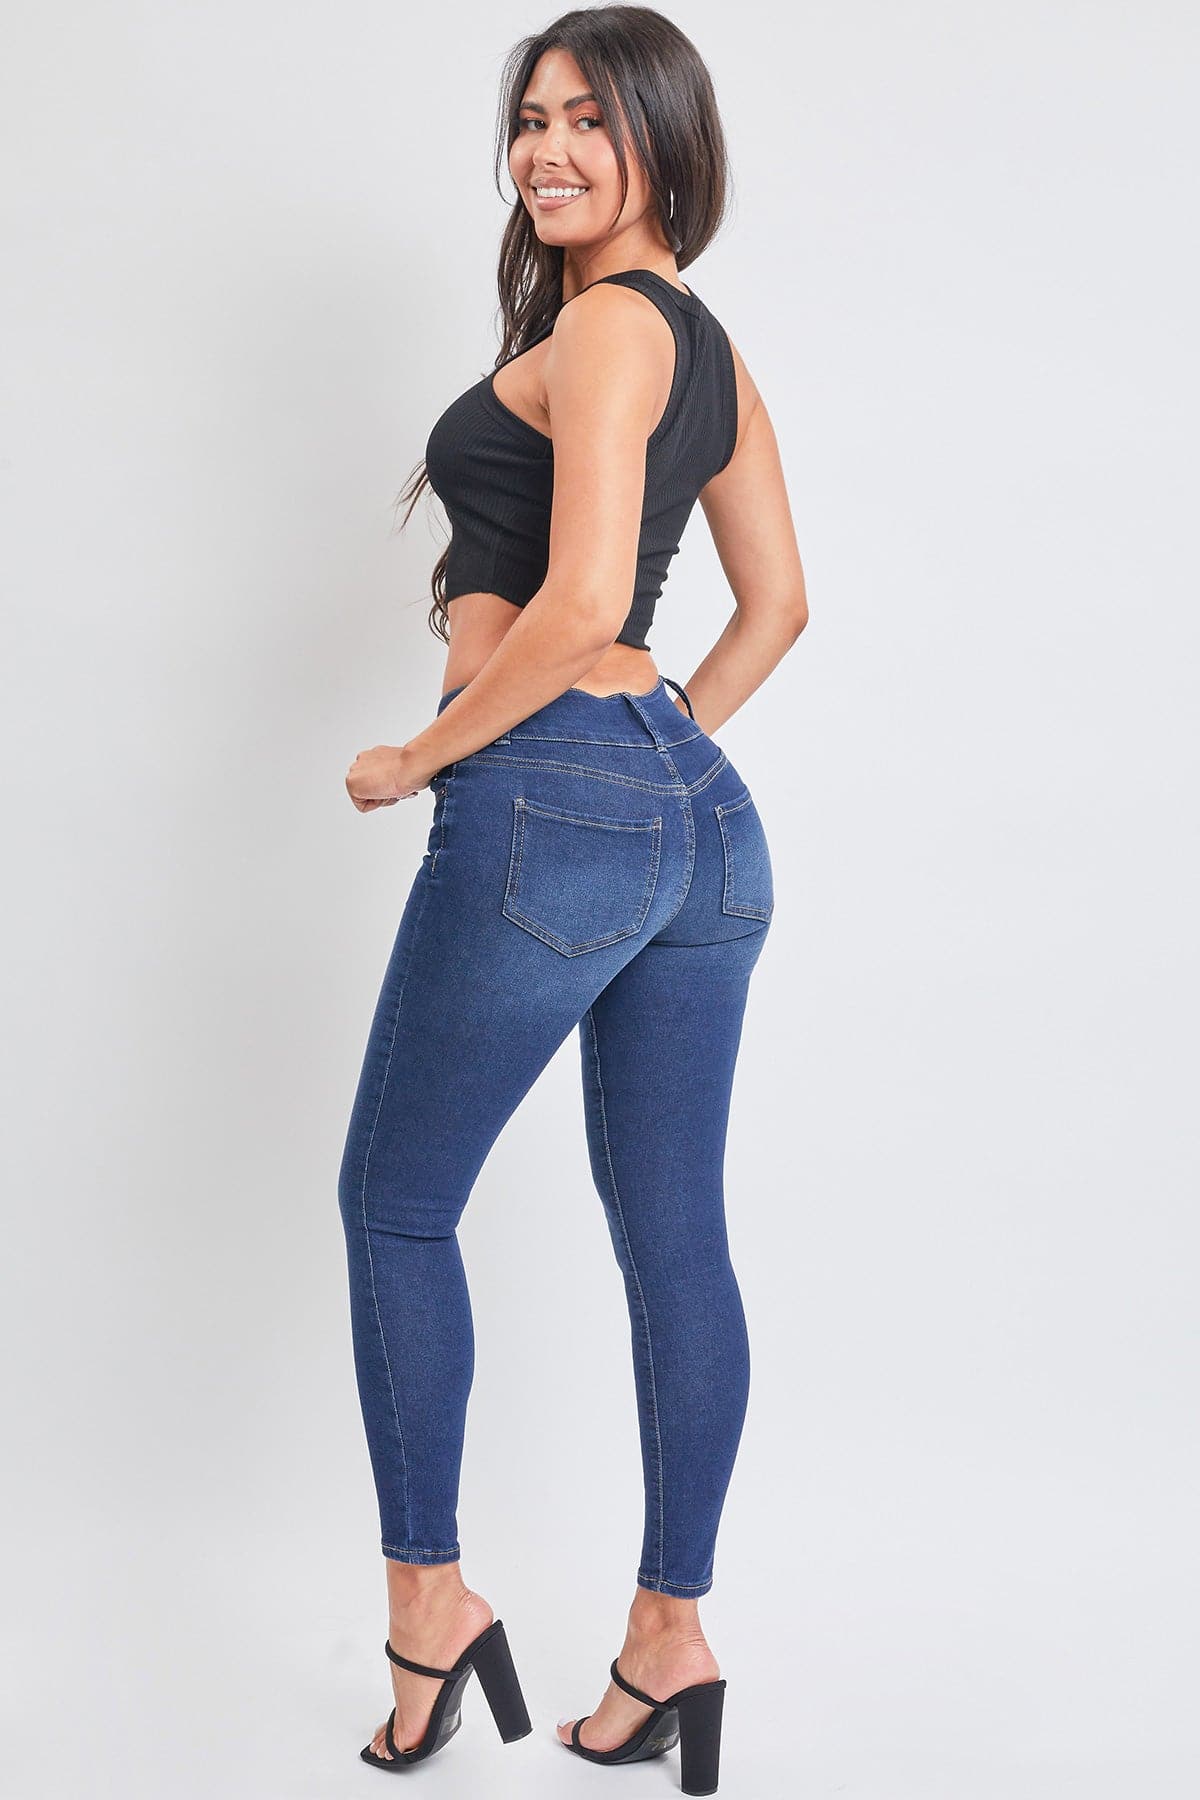 Women's Essential 3 Button Skinny Jeans from YMI – YMI JEANS